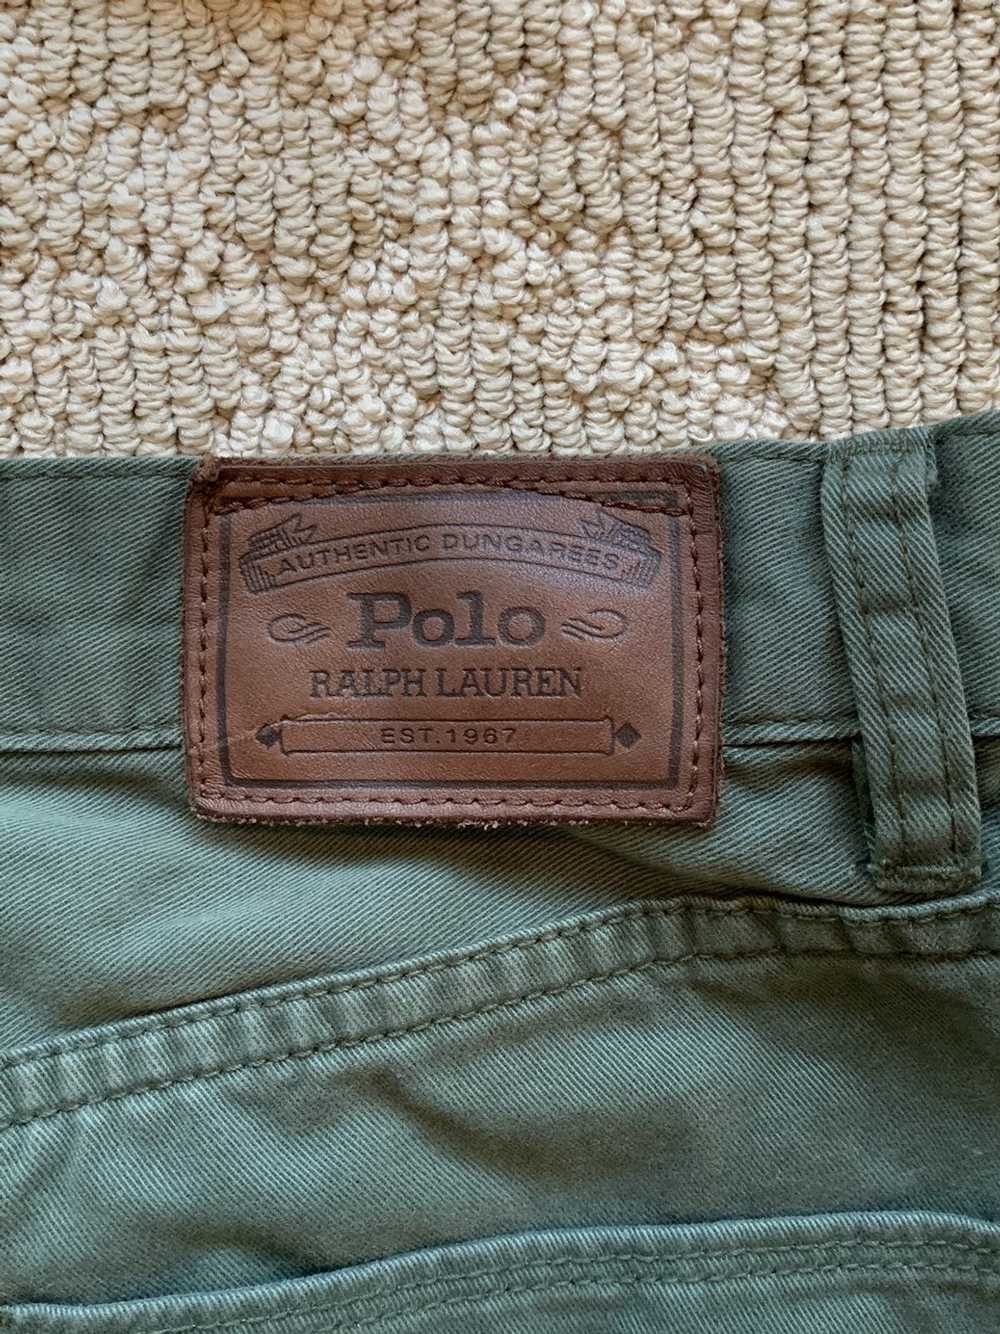 Polo Ralph Lauren Polo Ralph Lauren Pants - image 6